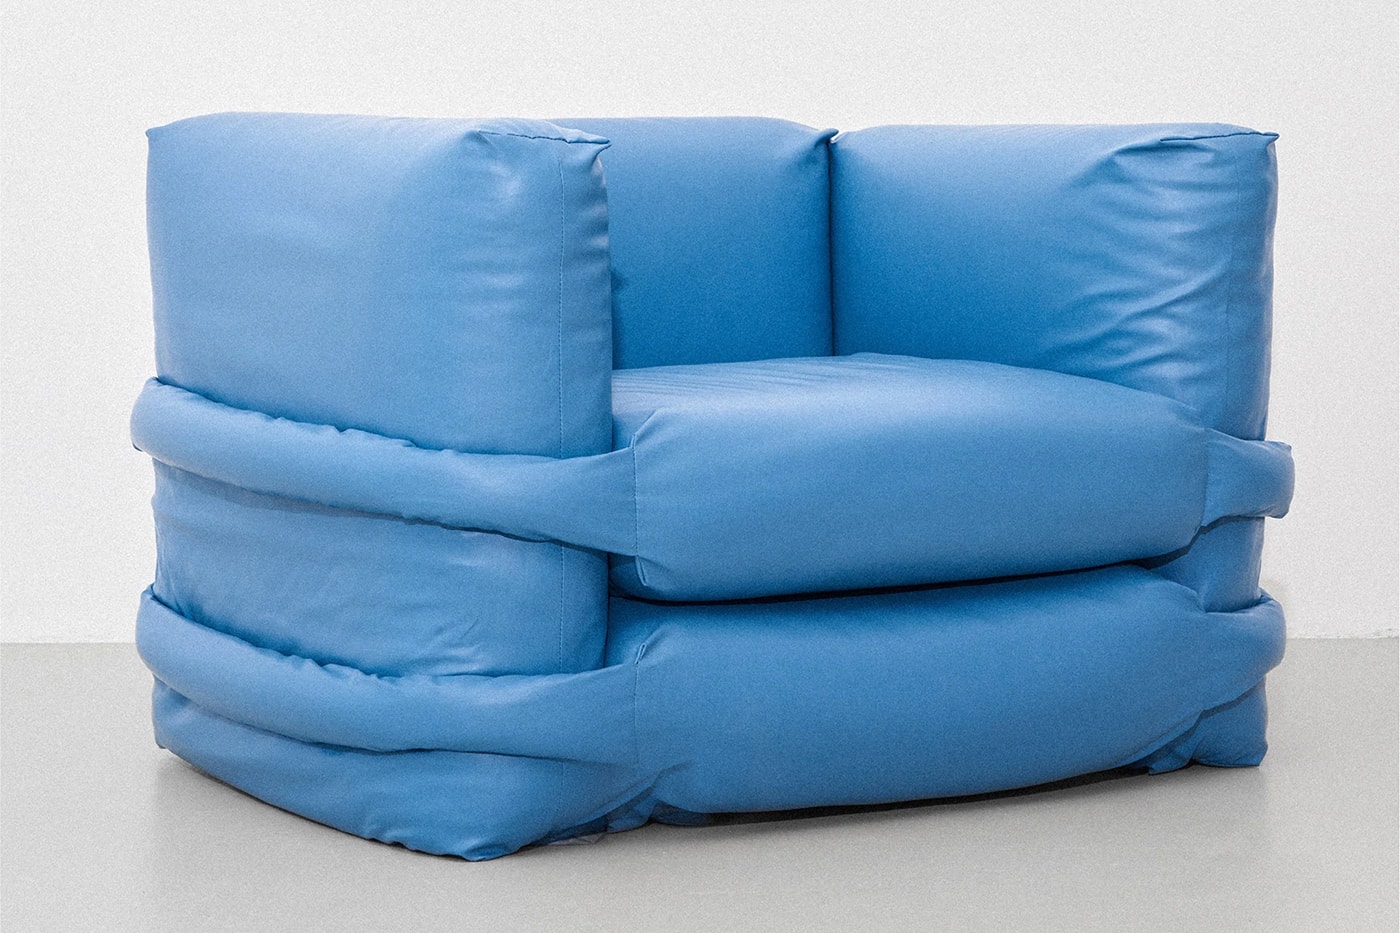 Muller Van Severen and Kassl Editions Drop Limited-Edition "Pillow" Sofa